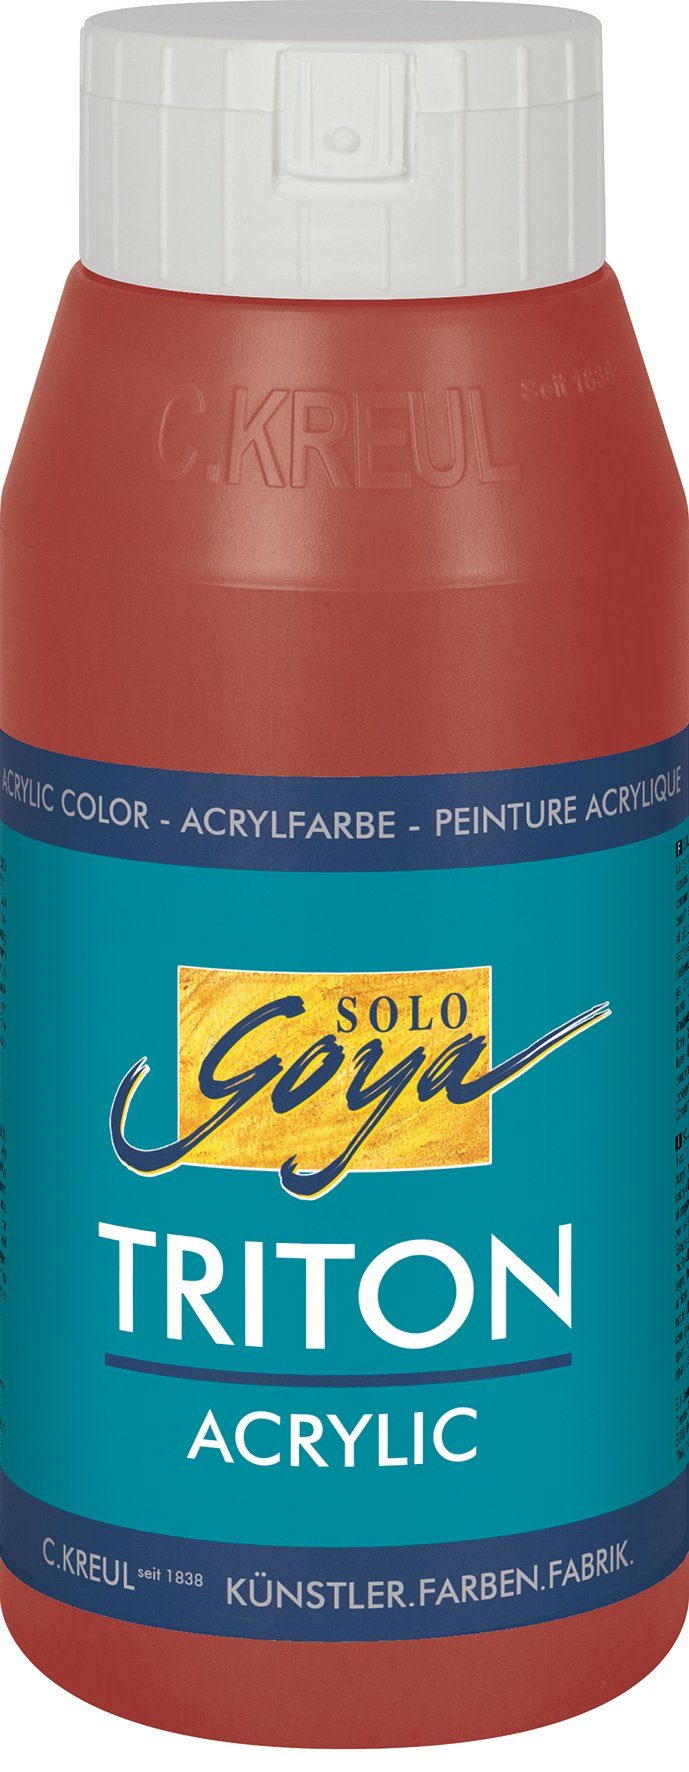 Oxydrot Triton Kreul Solo Acrylic, 750 Goya ml Acrylfarbe